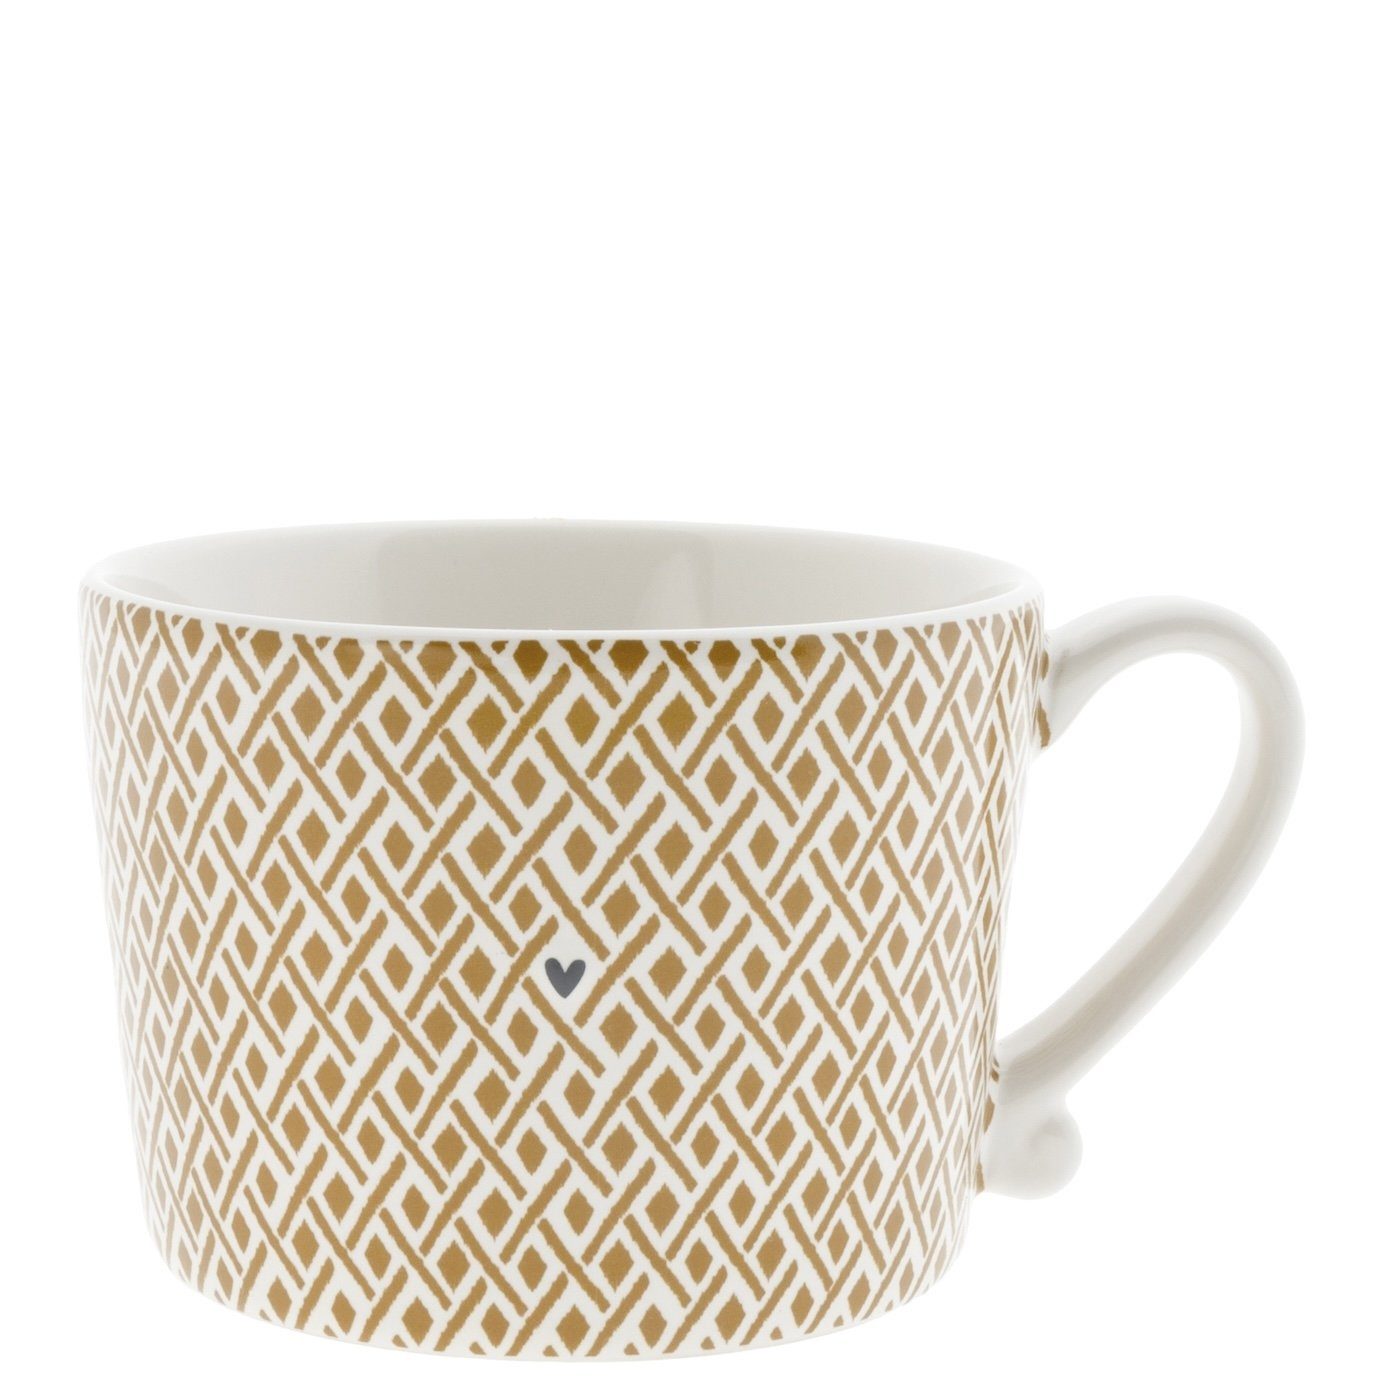 karamell, Henkel mit Tasse Keramik Collections Bastion Tasse Keramik, weiß Little Check handbemalt